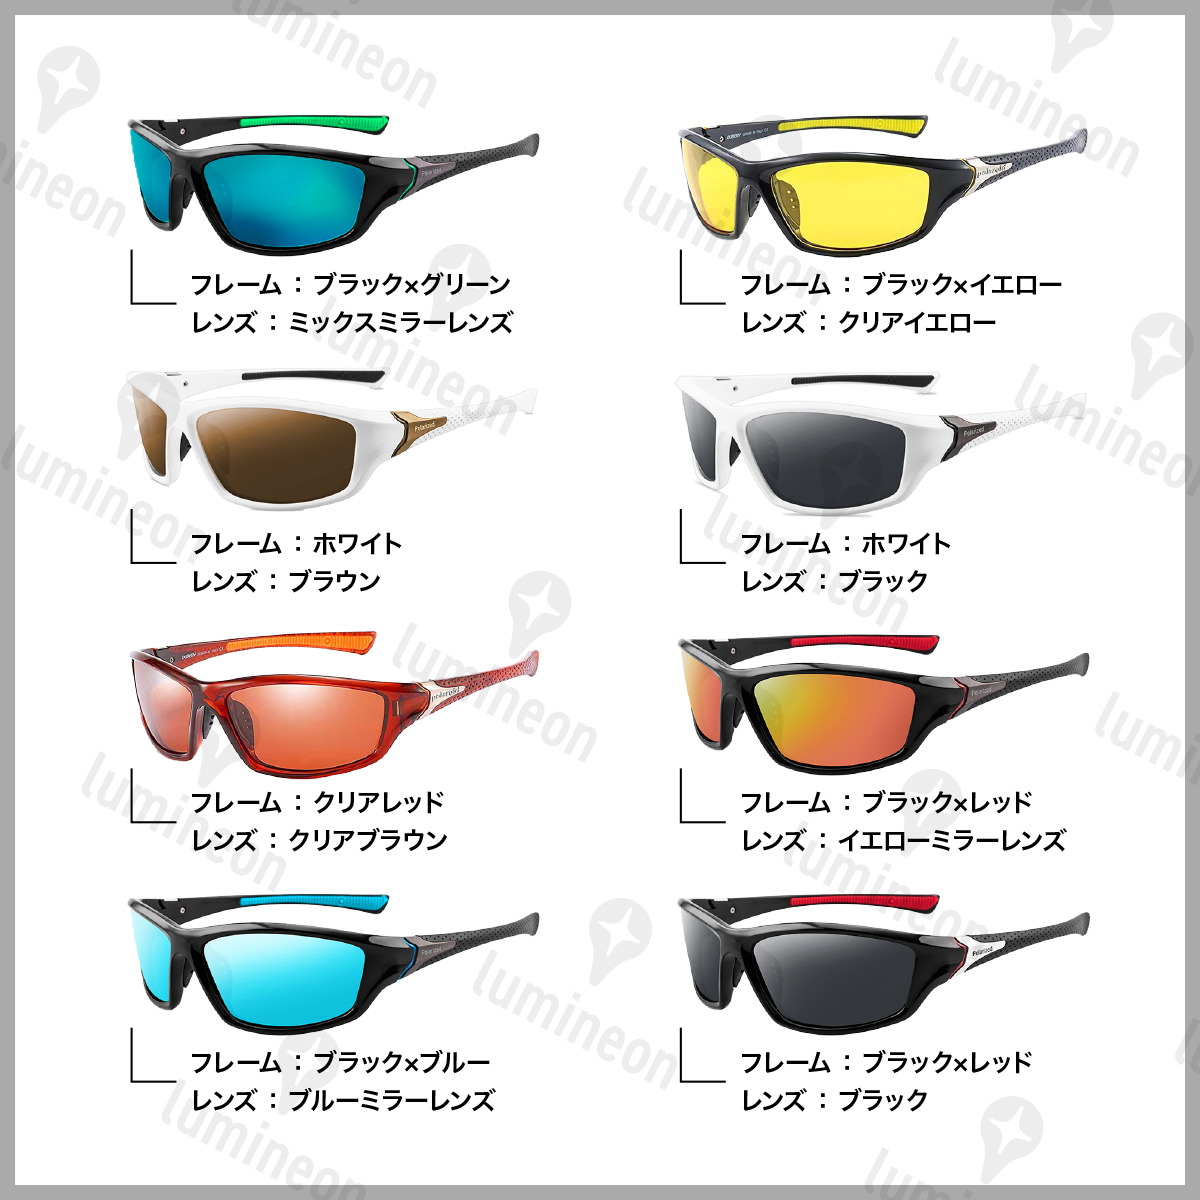  sunglasses polarized light case attaching UV cut light weight stylish black man and woman use outdoor sport Golf fishing car bike Drive . diversion g142f 3